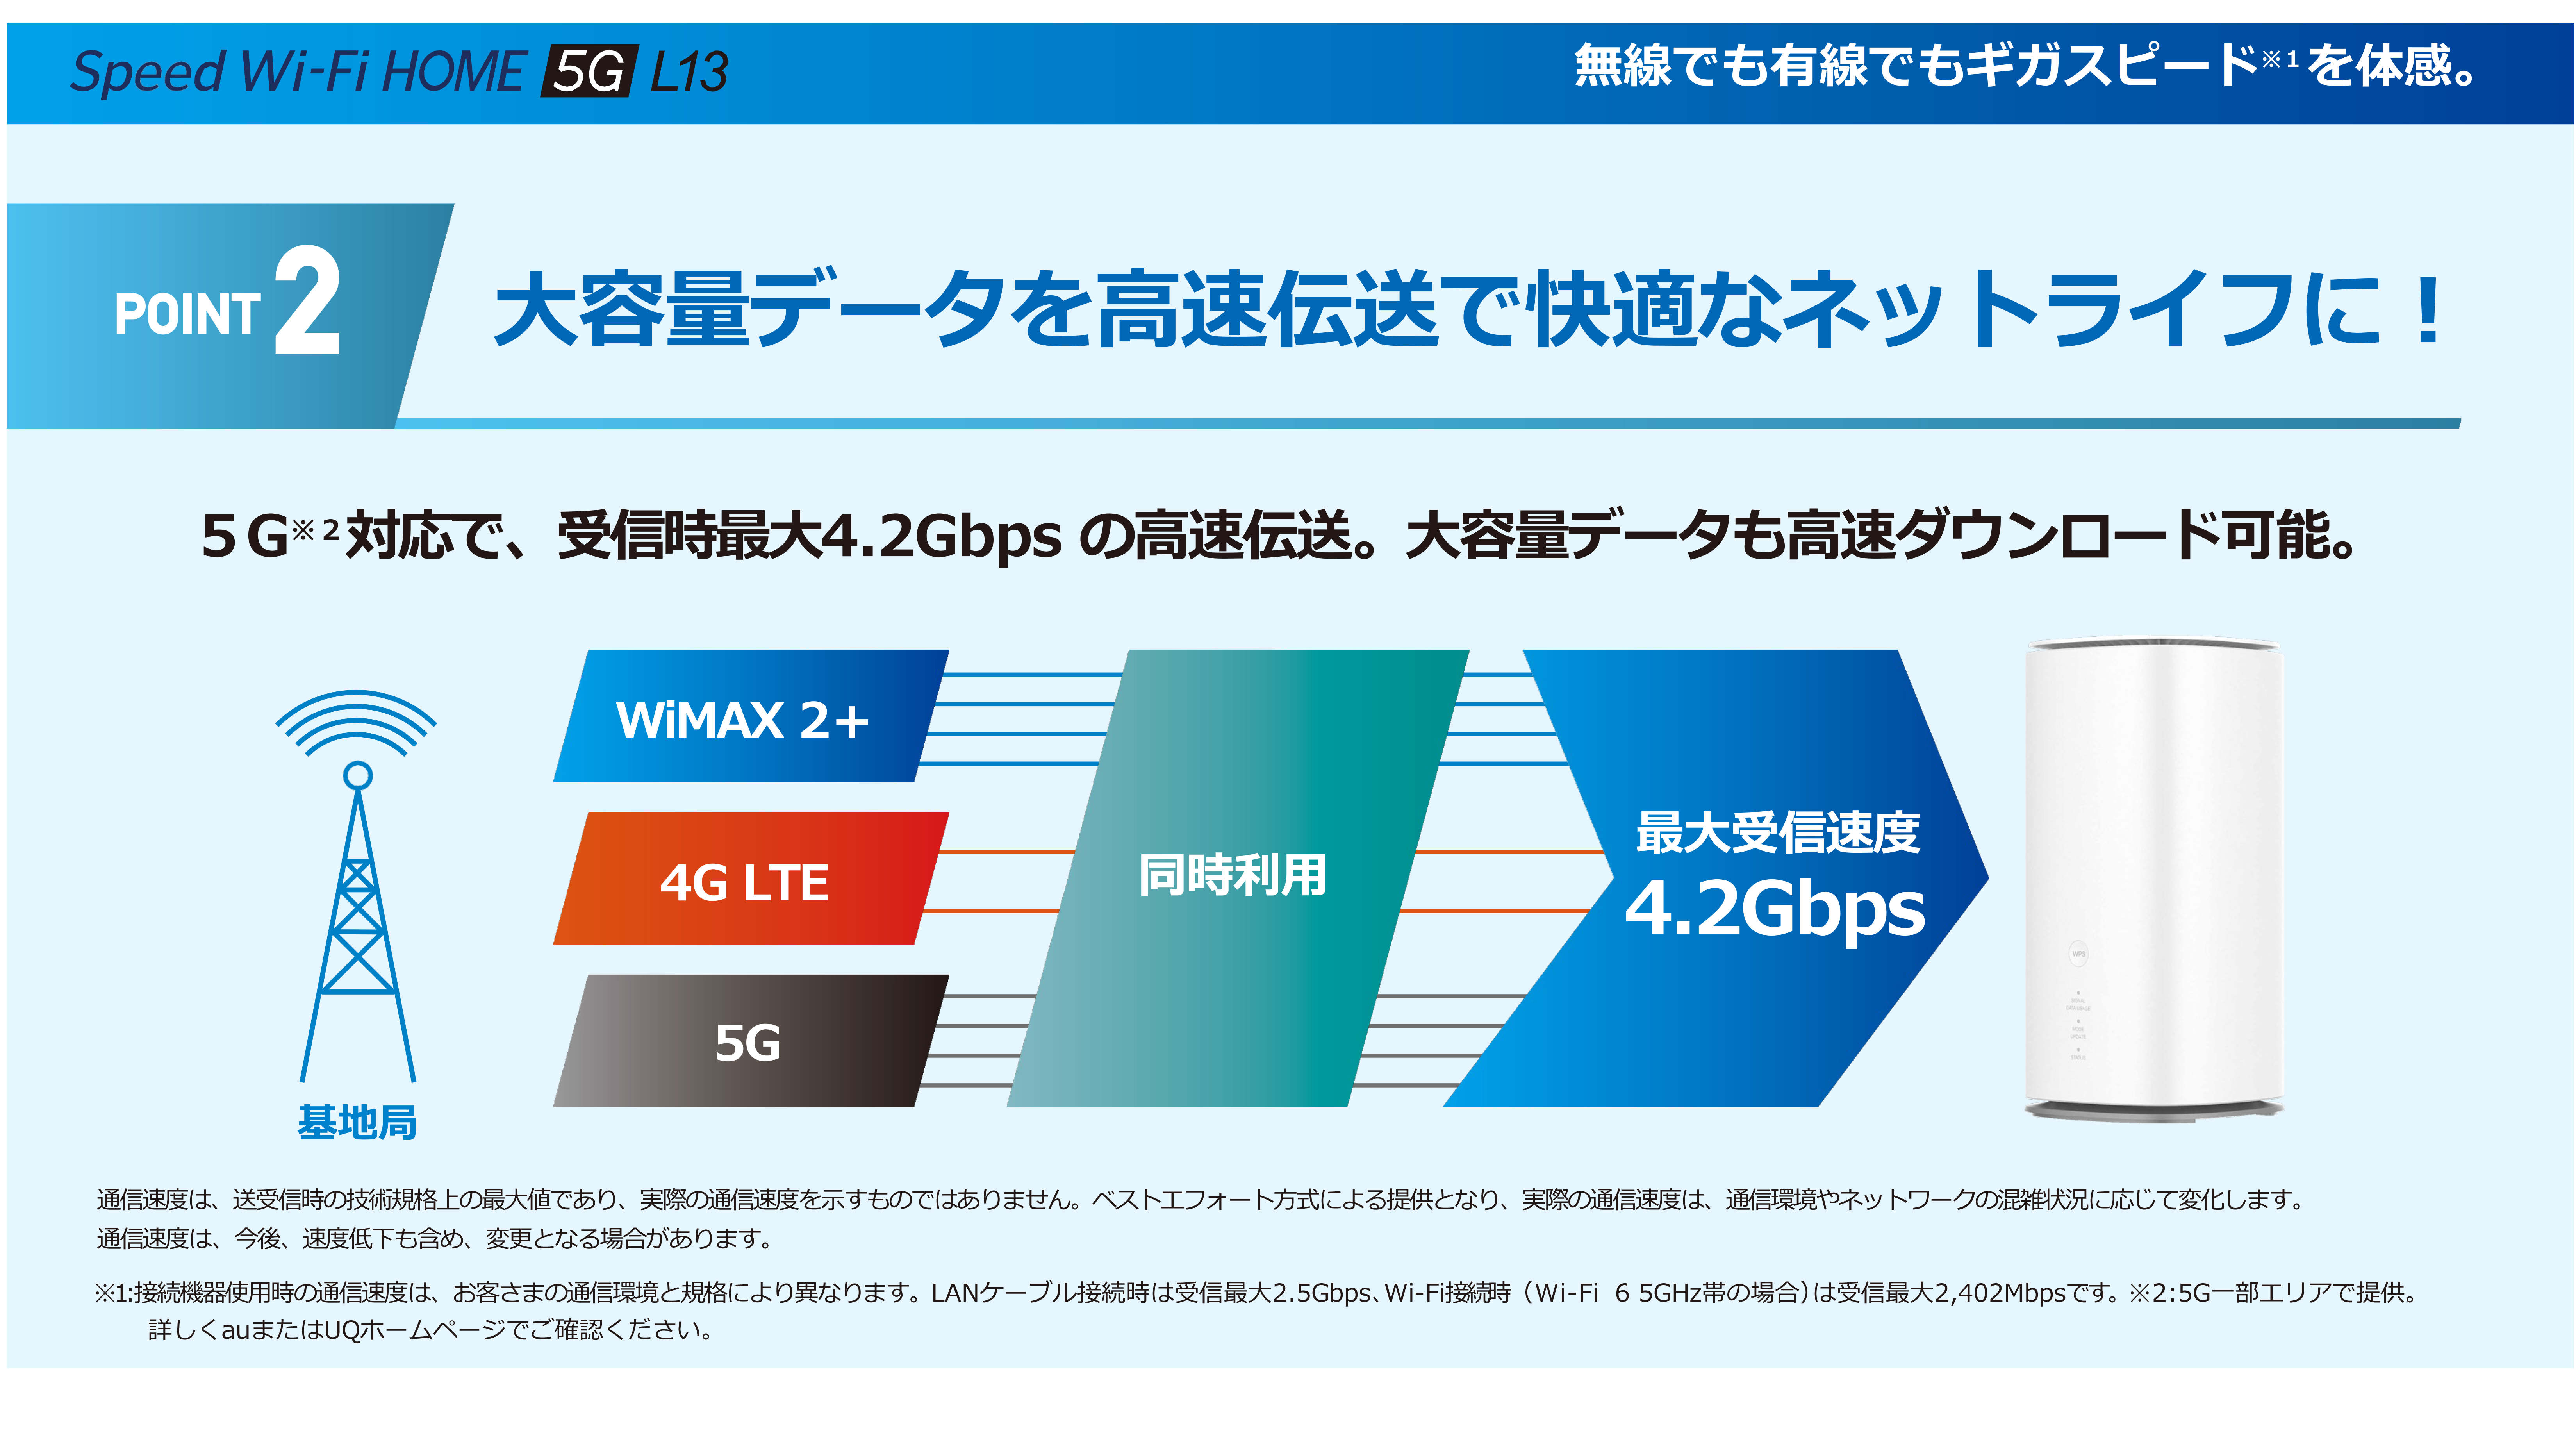 Speed Wi-Fi HOME 5G L13 – ZTE Device Japan